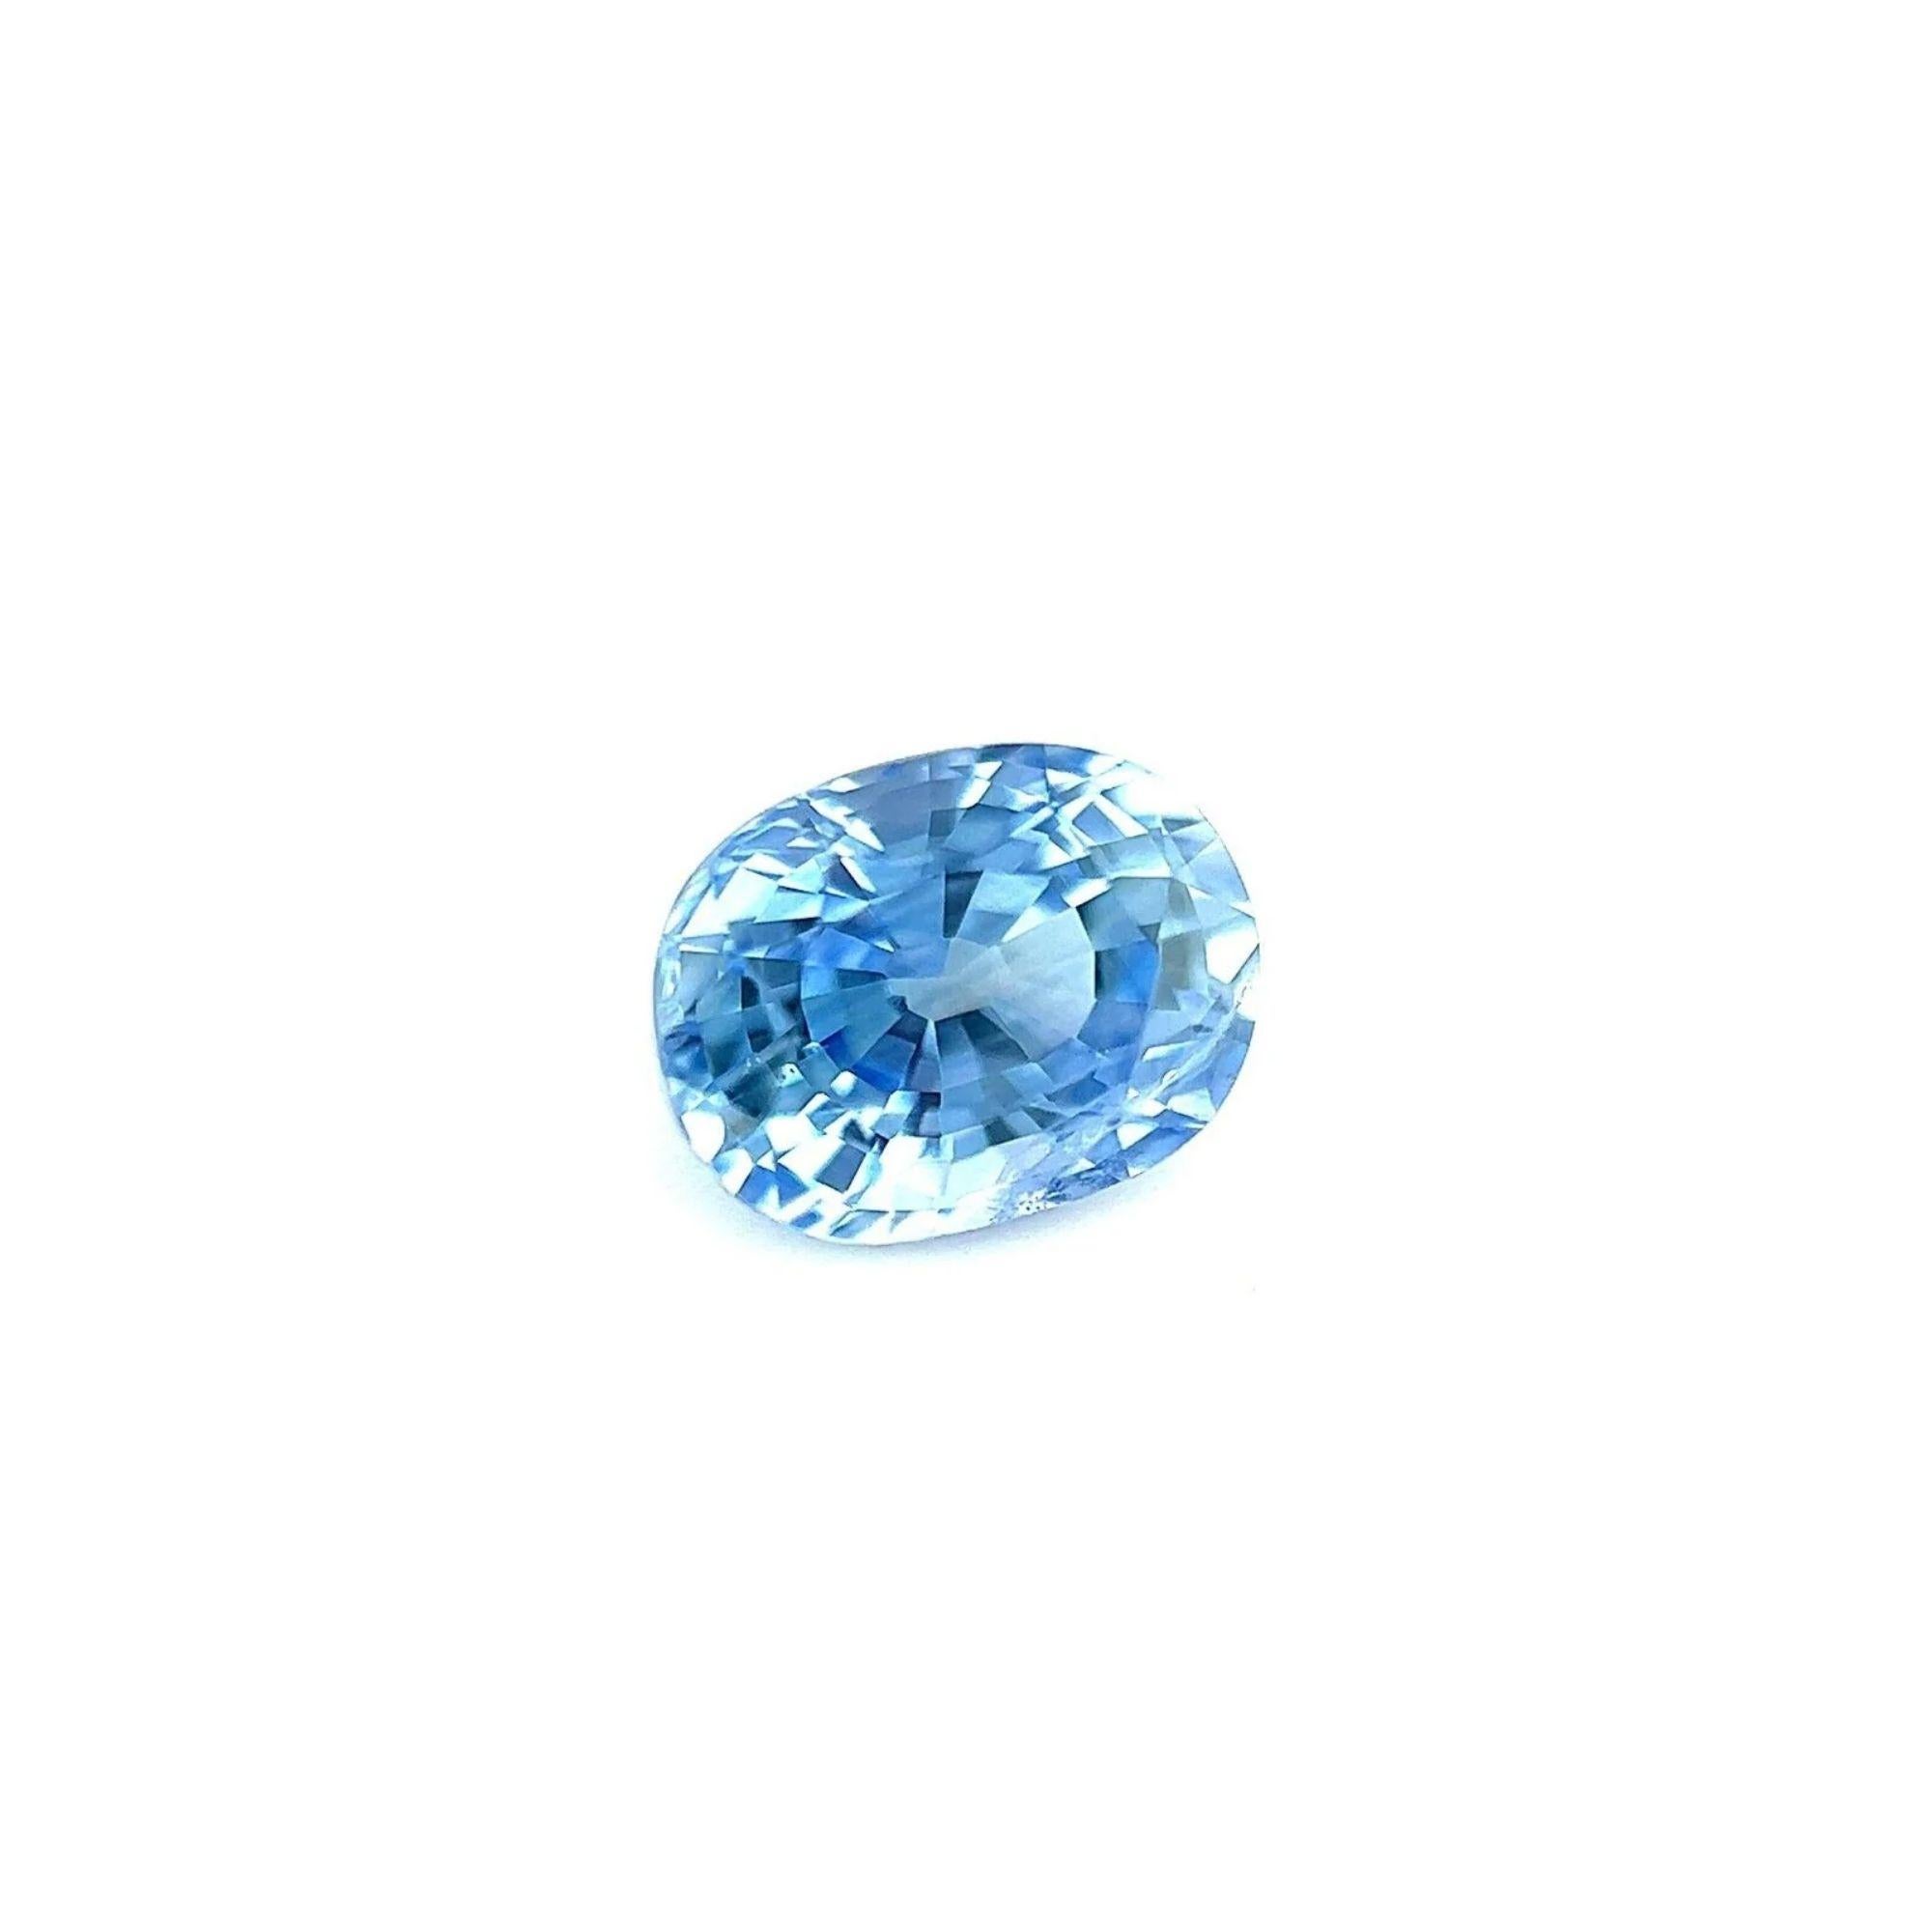 Top Grade 1.11ct Natural Vivid Ceylon Blue Sapphire Oval Cut Sri Lanka 6.5X5mm
                                                                                                                                                                          